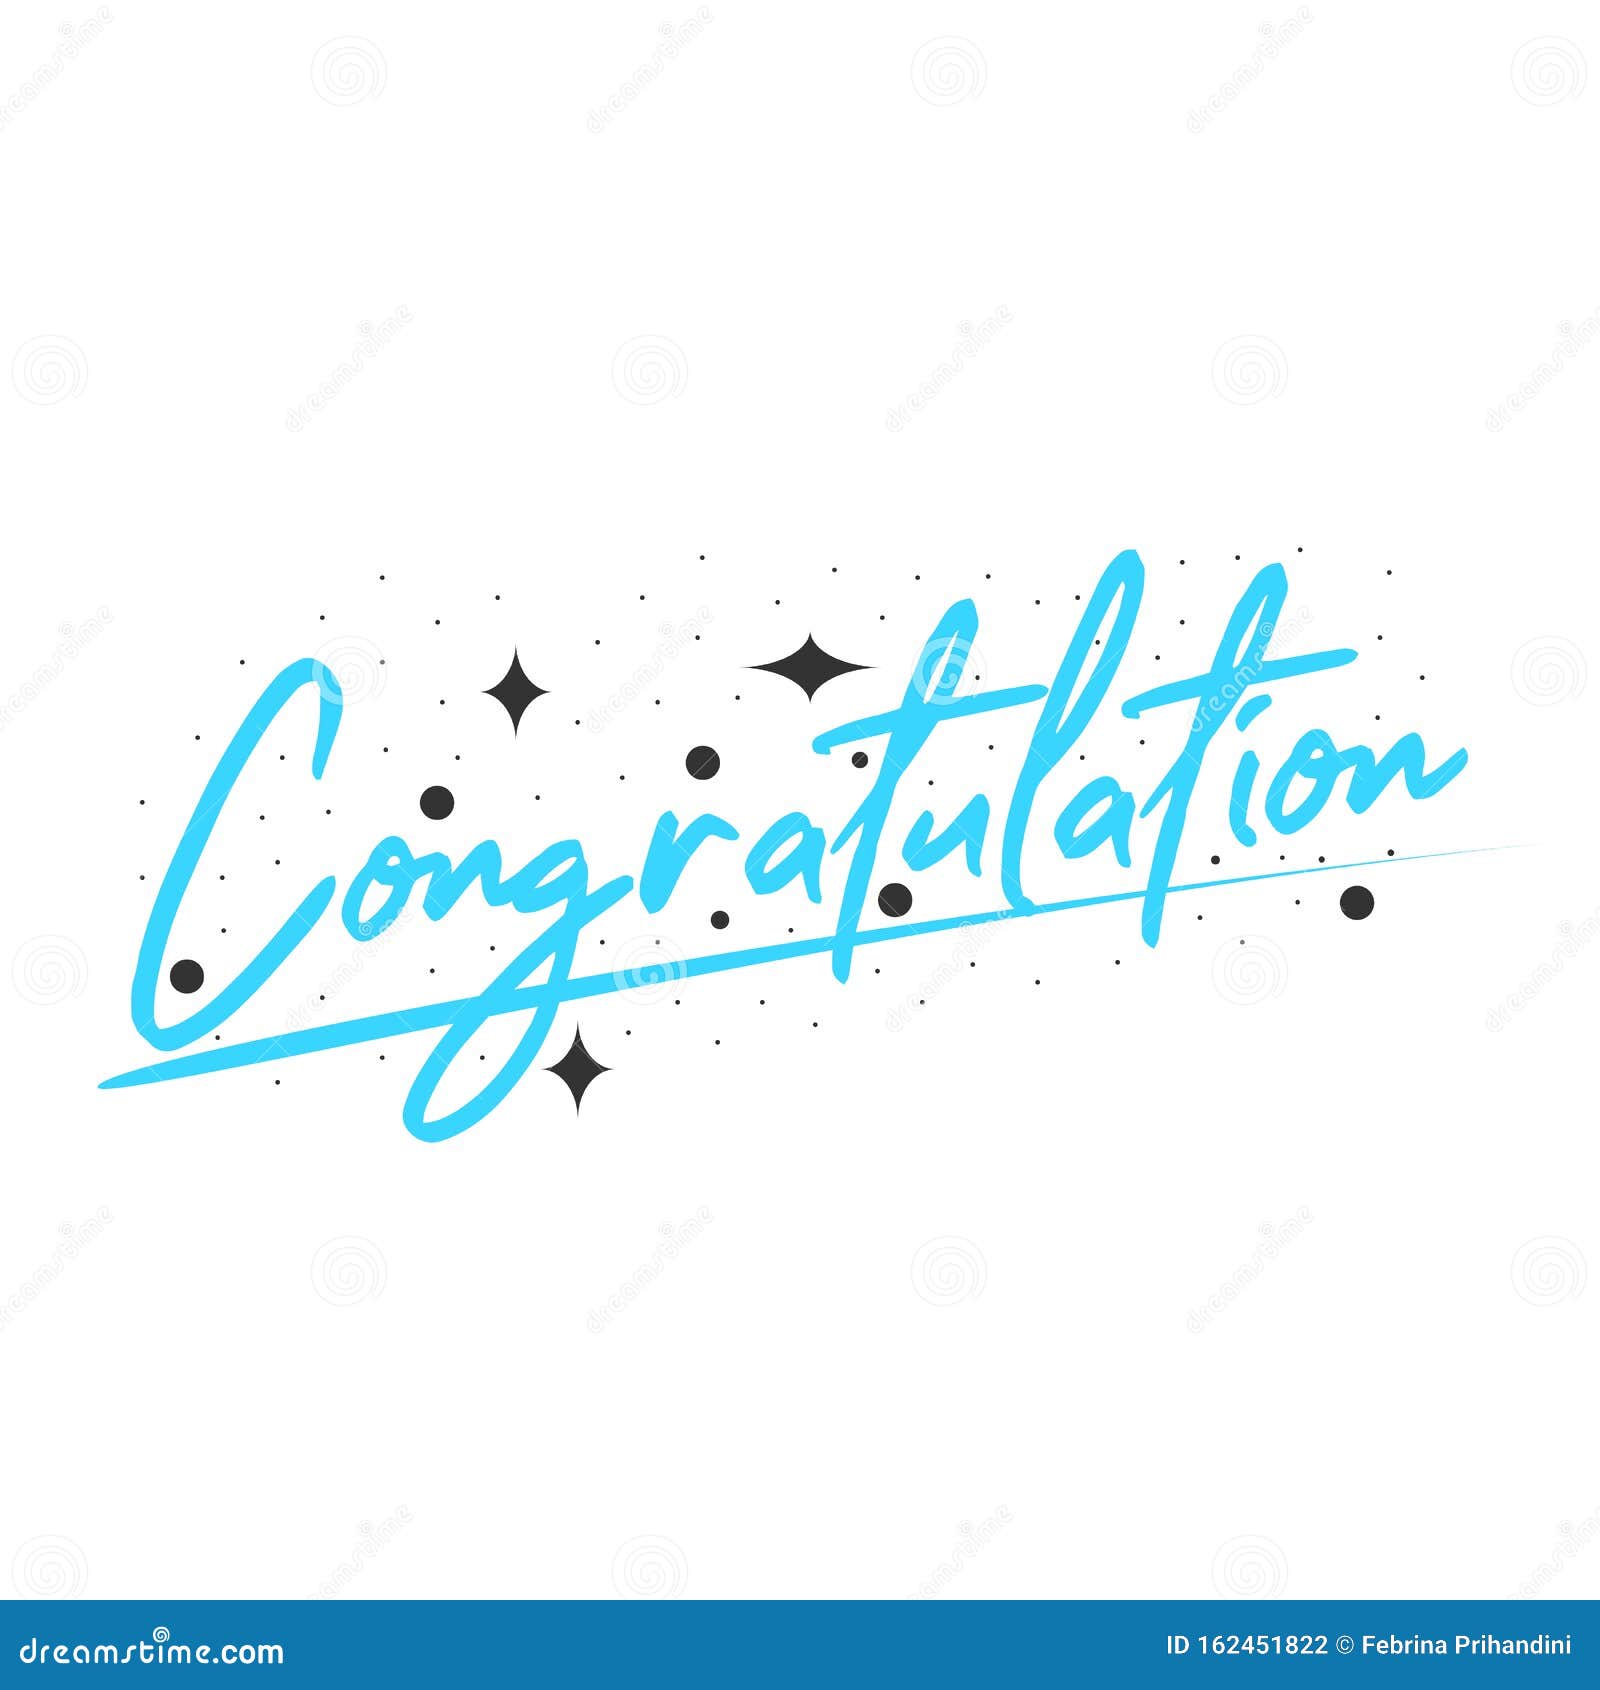 Congratulation stock vector. Illustration of congrats - 162451822